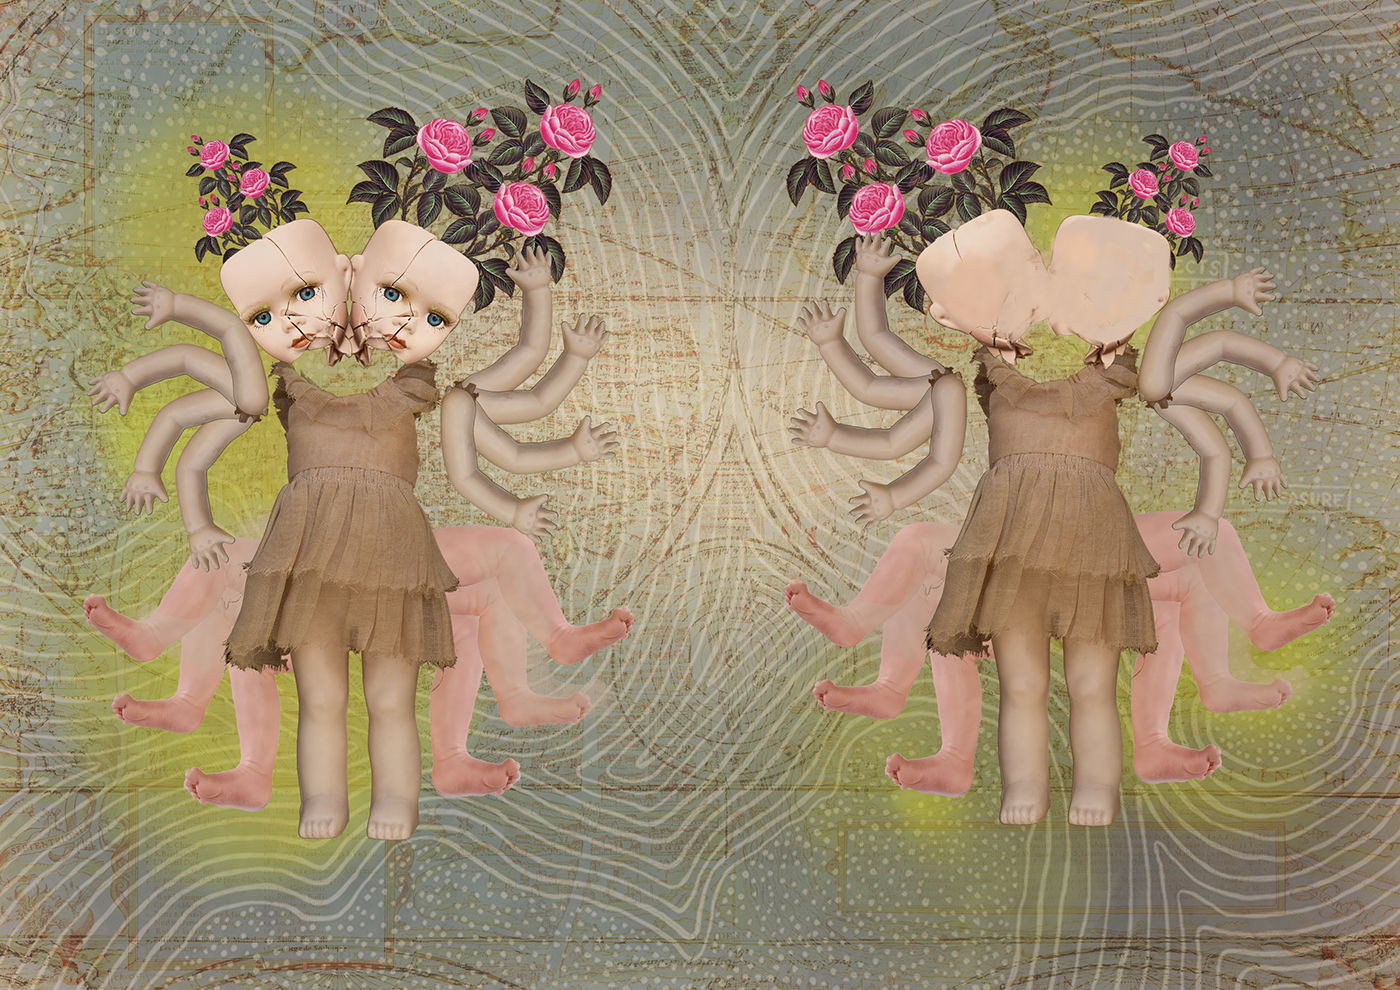 #collage #doll #artwork #finearts #digital #digitalpainting